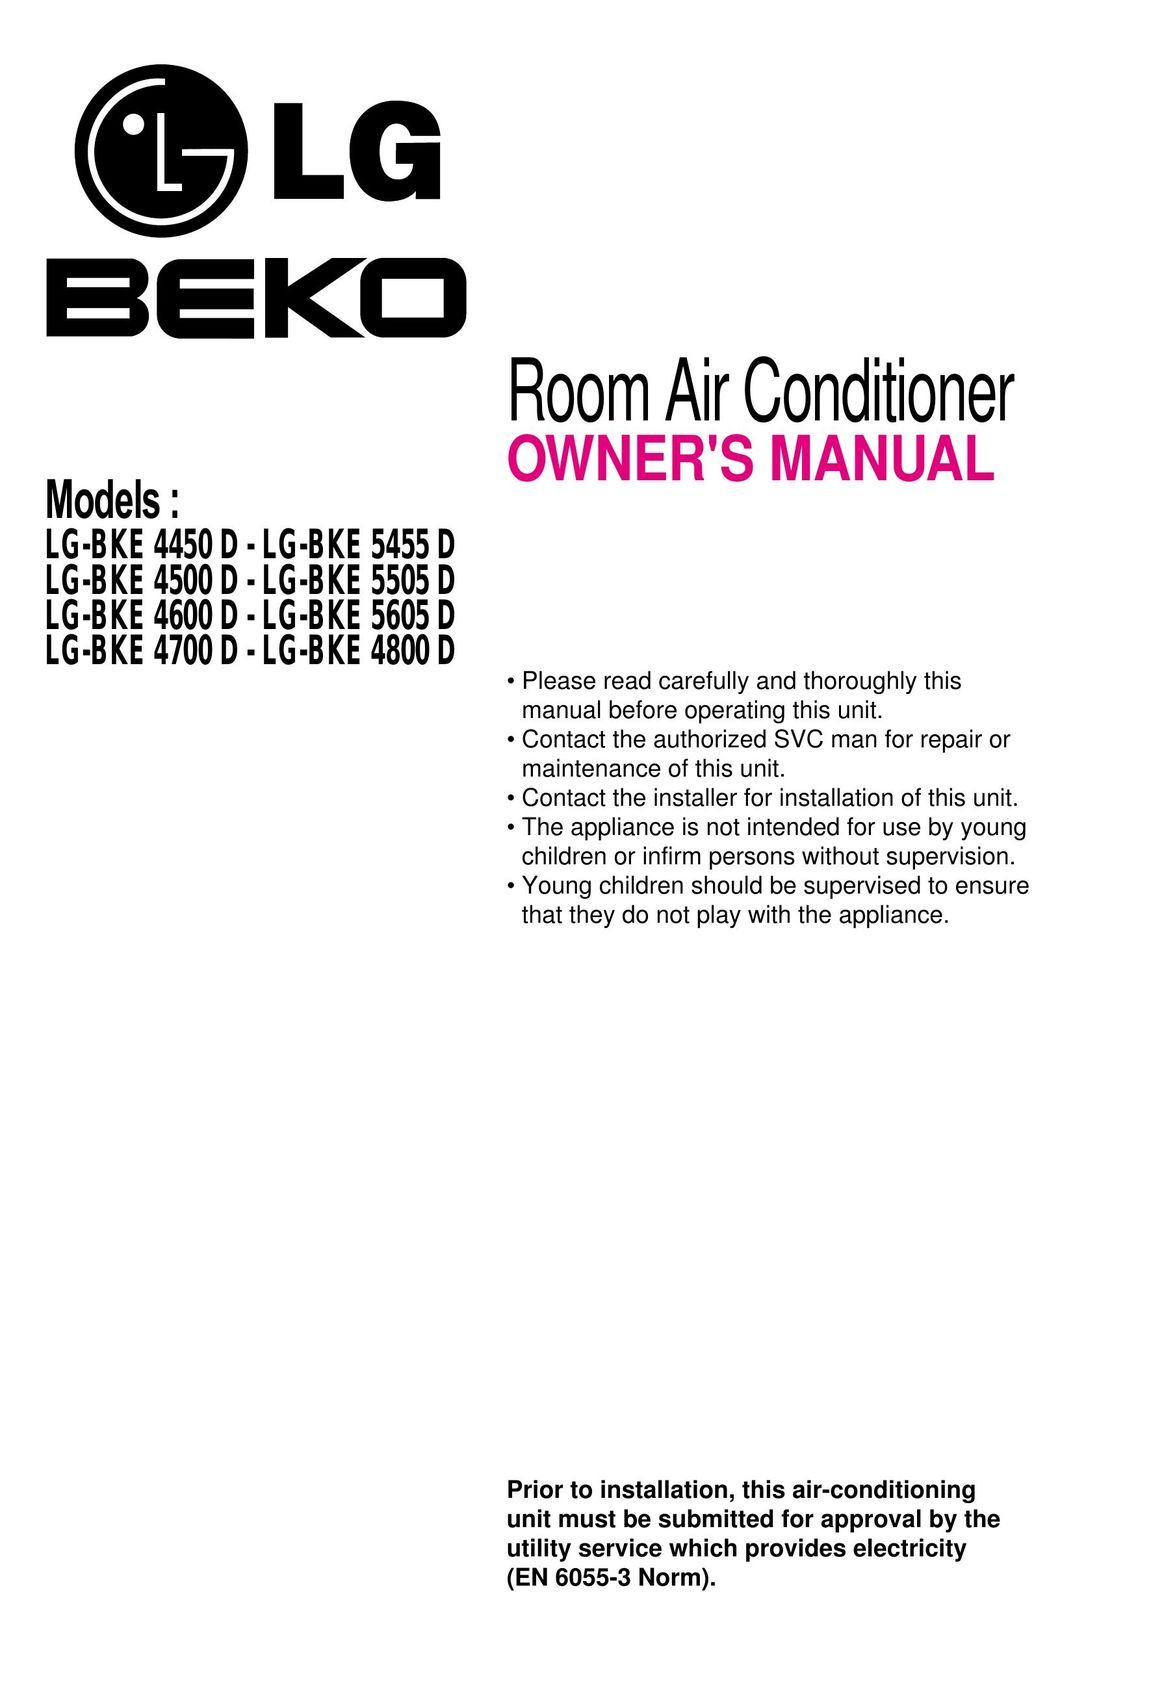 Beko LG-BKE 4600 D, LG-BKE 5605 D Air Conditioner User Manual